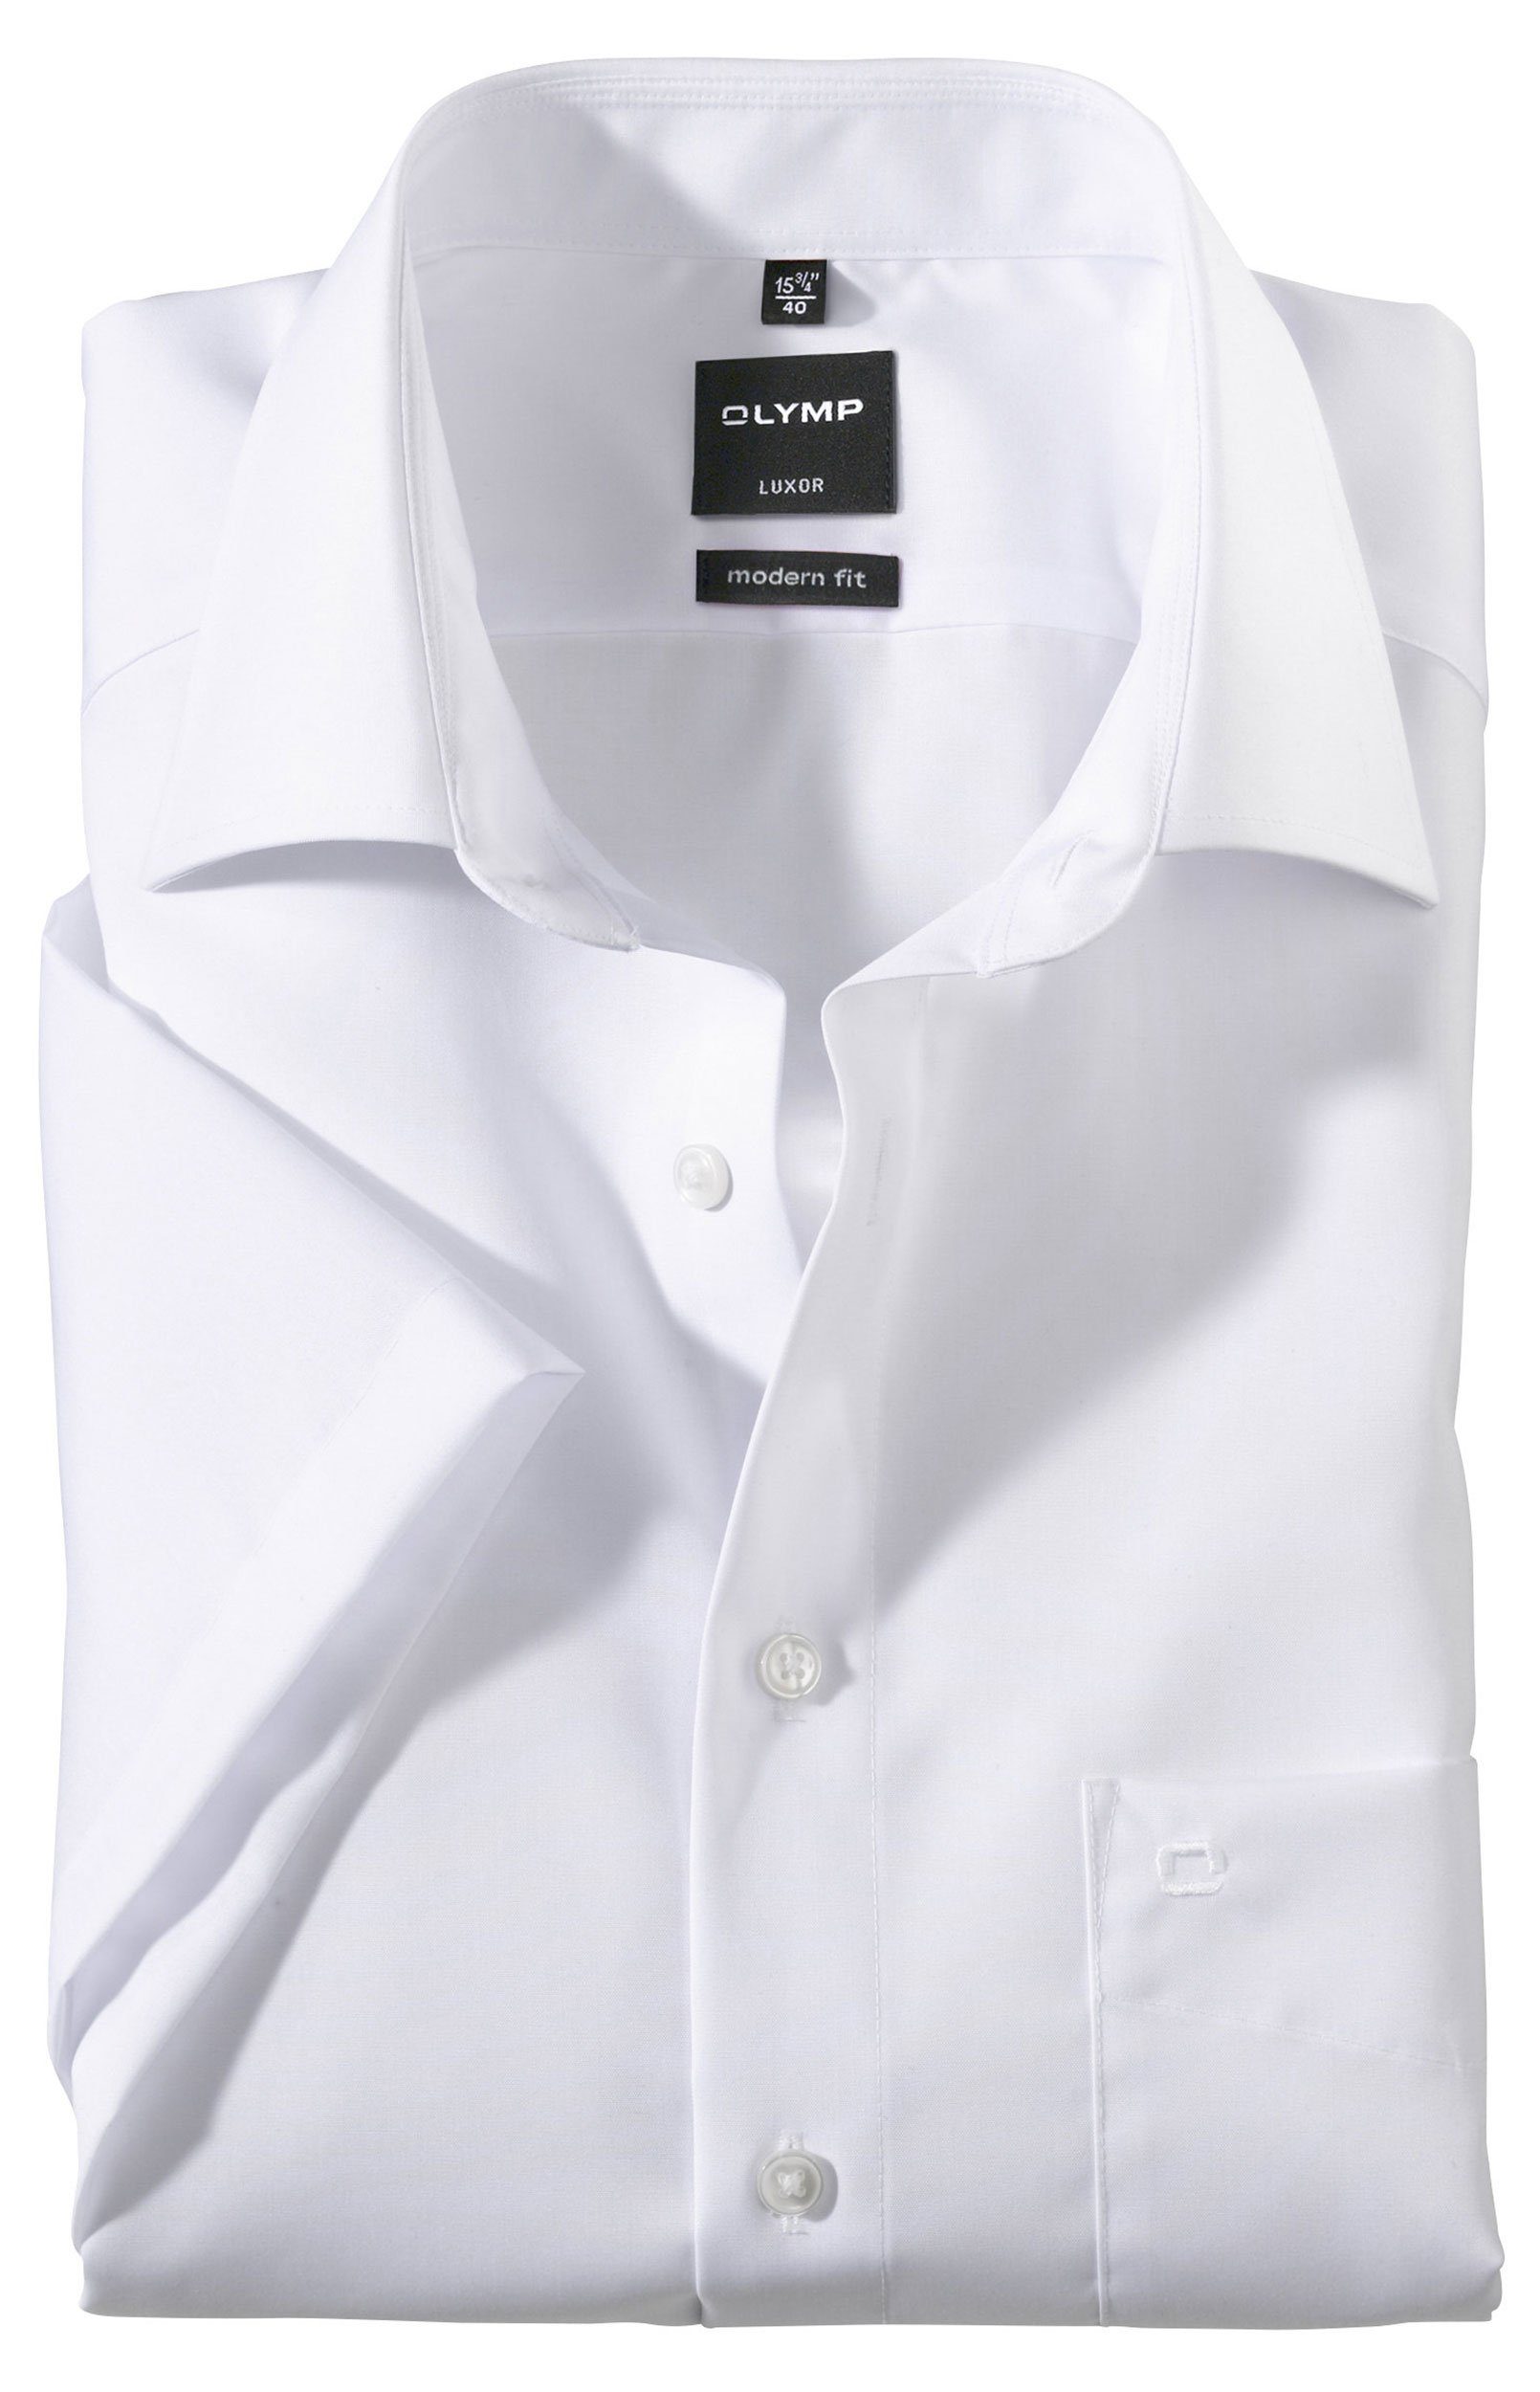 billige Originalprodukte OLYMP Kurzarmhemd OLYMP Luxor - Hemd weiß 0300/12/00 modern fit Kurzarm